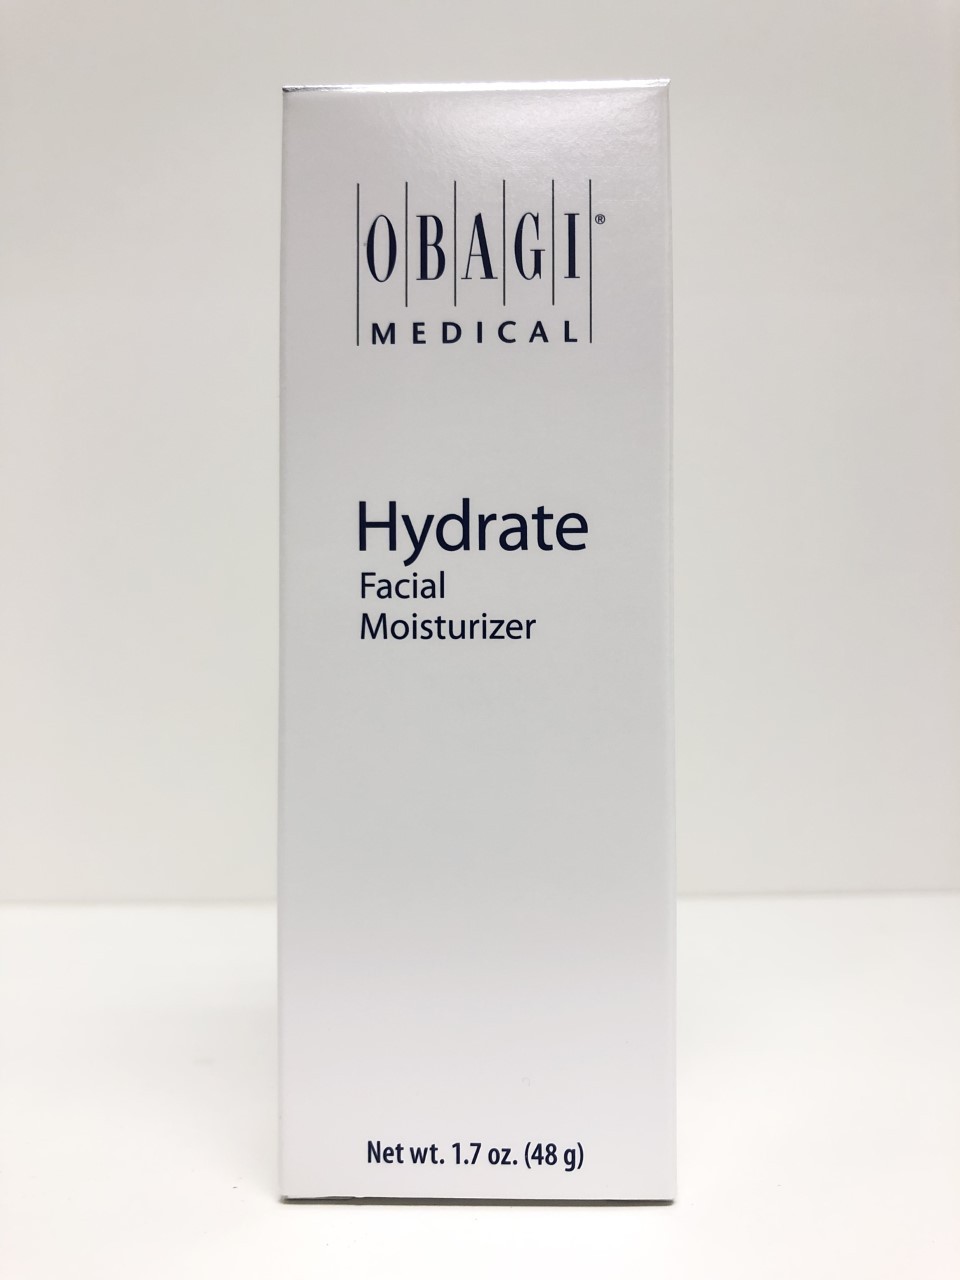 OBAGI Hydrate Facial Moisturizer 1.7 oz Brand New in box - $43.00